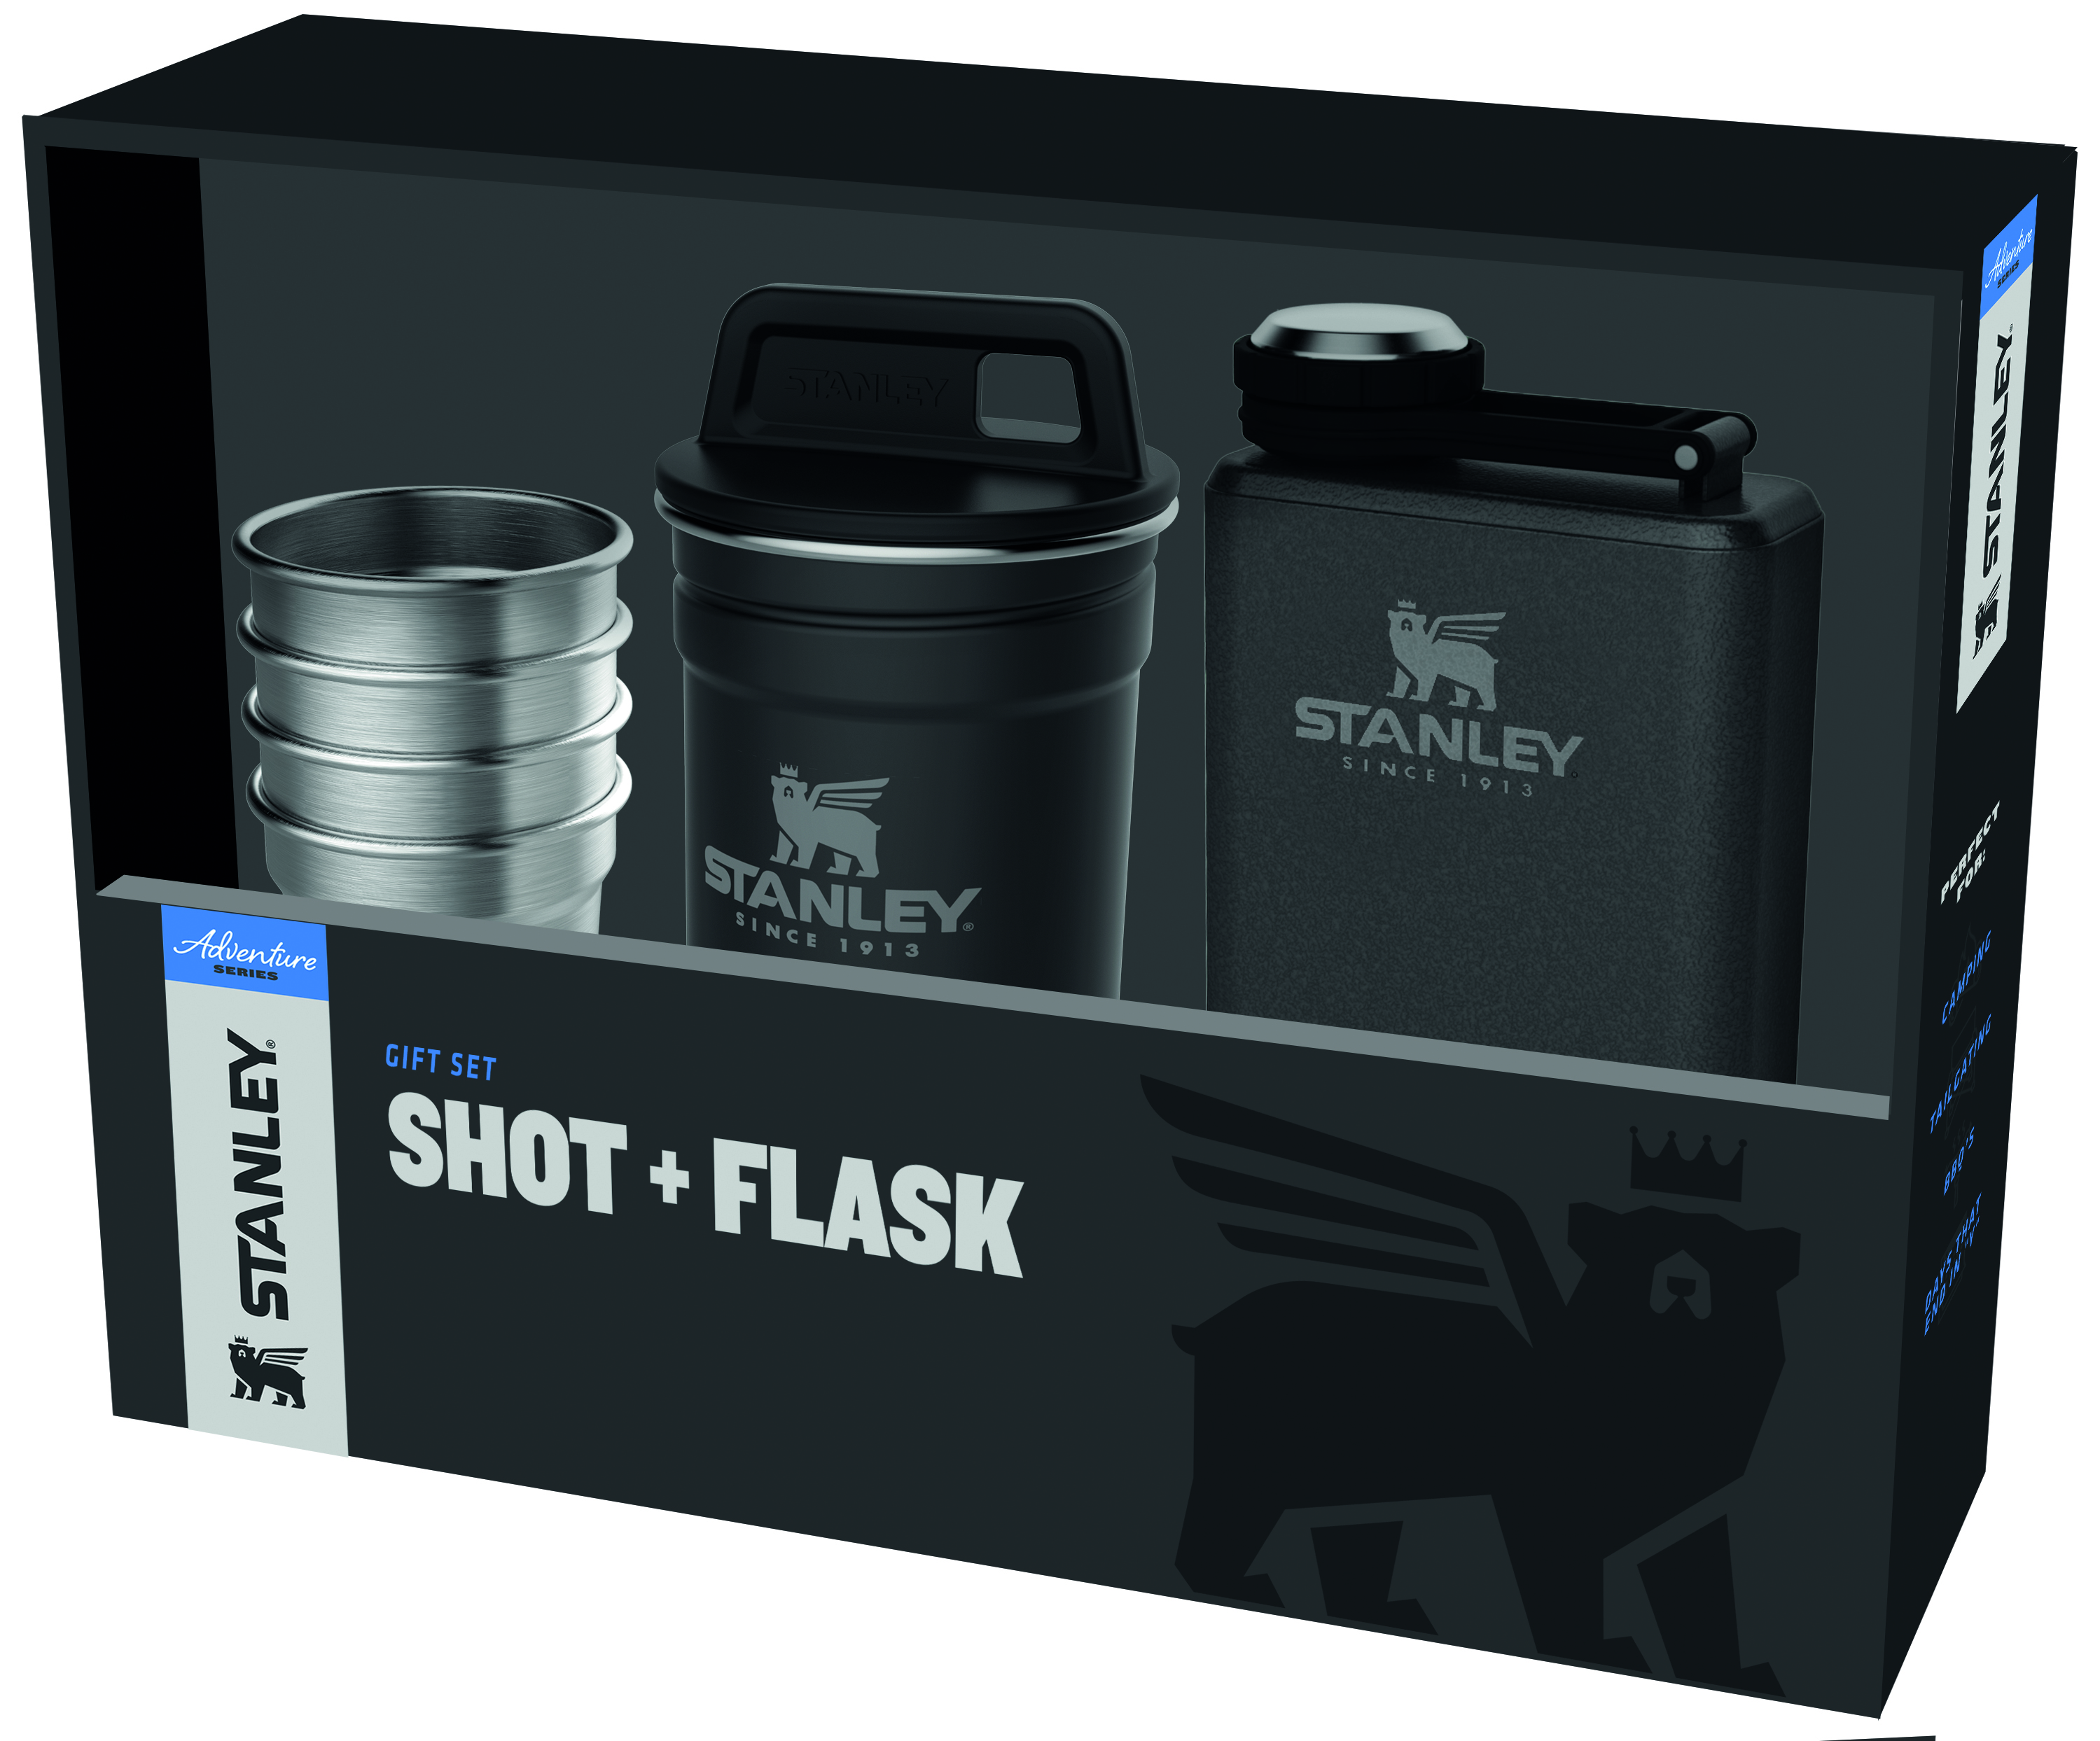 Stanley Adventure Pre-Party Stainless Steel Shotglass + Flask Set - Matte  Black 